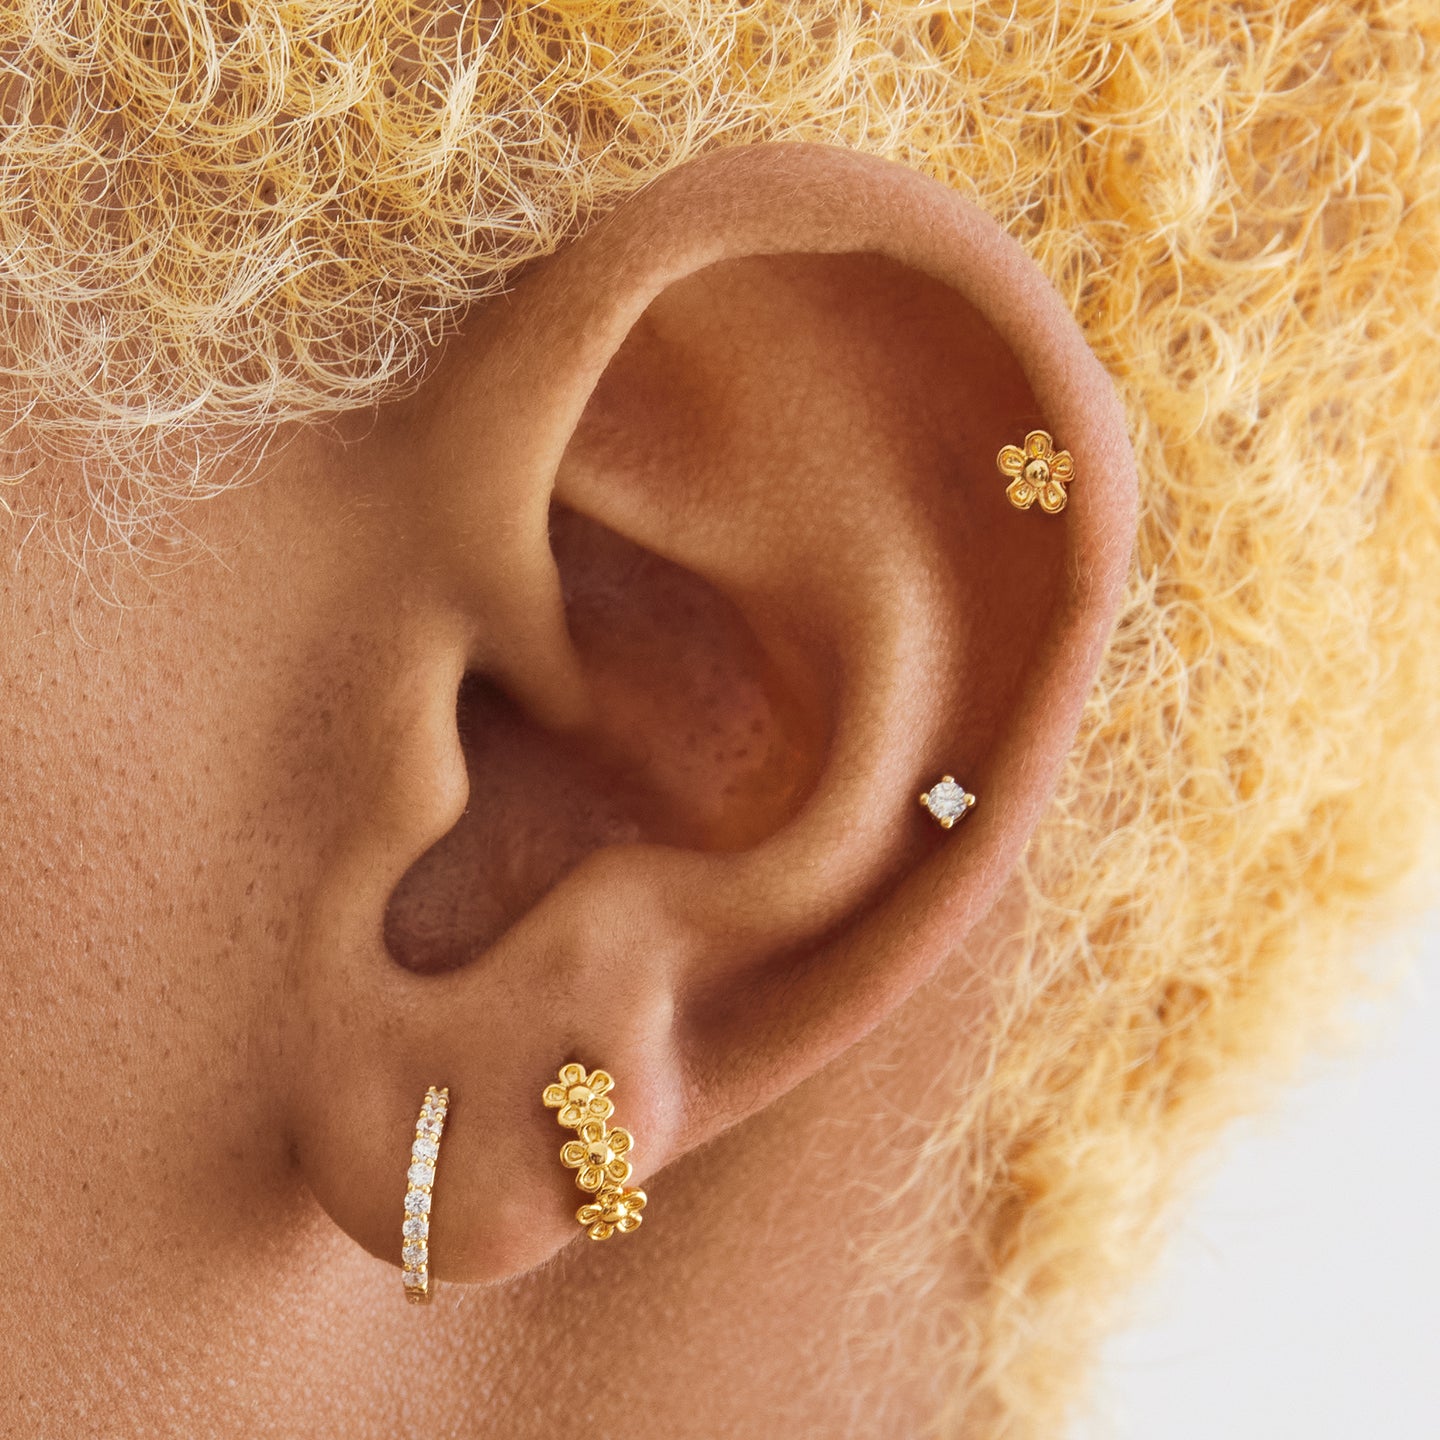 36 Pairs/set Cute Mixed Flower Pattern Stud Earrings For Kids